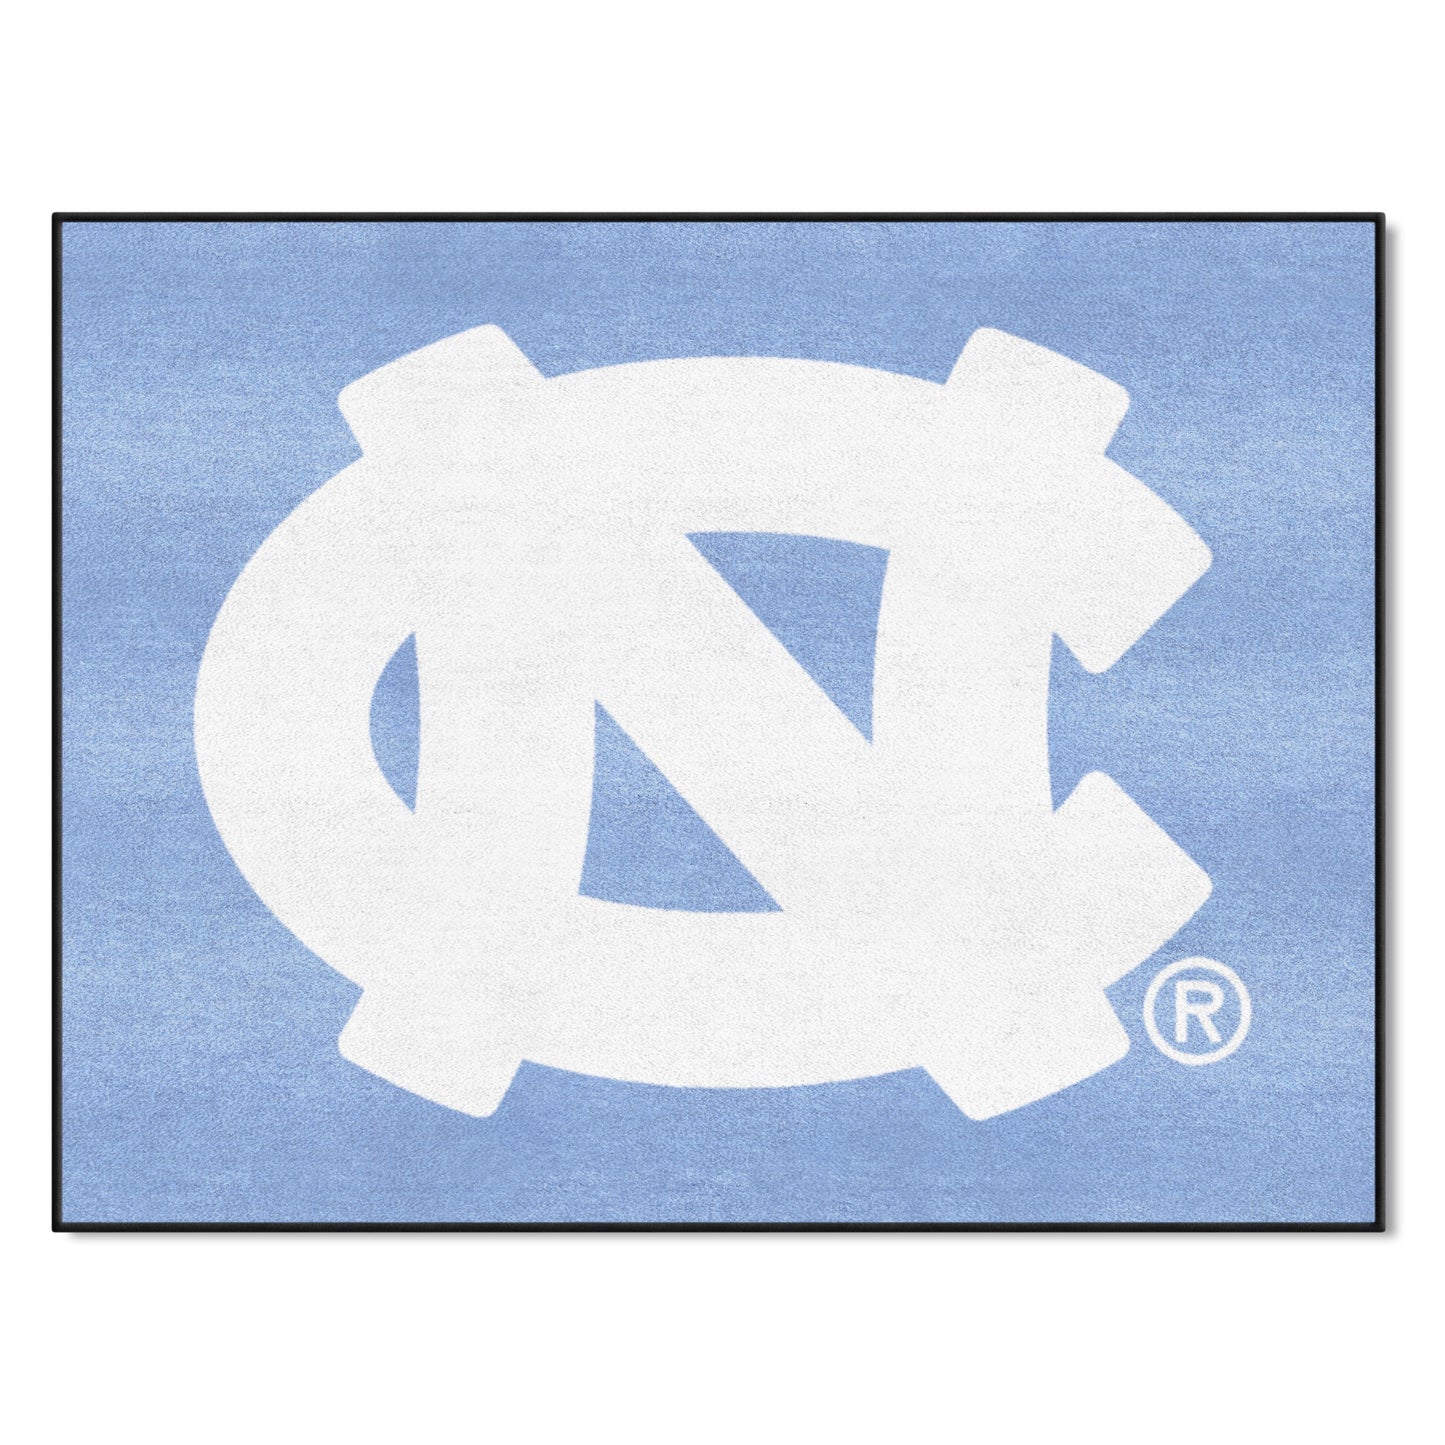 North Carolina Tar Heels All-Star Mat with NC Logo by Fanmats